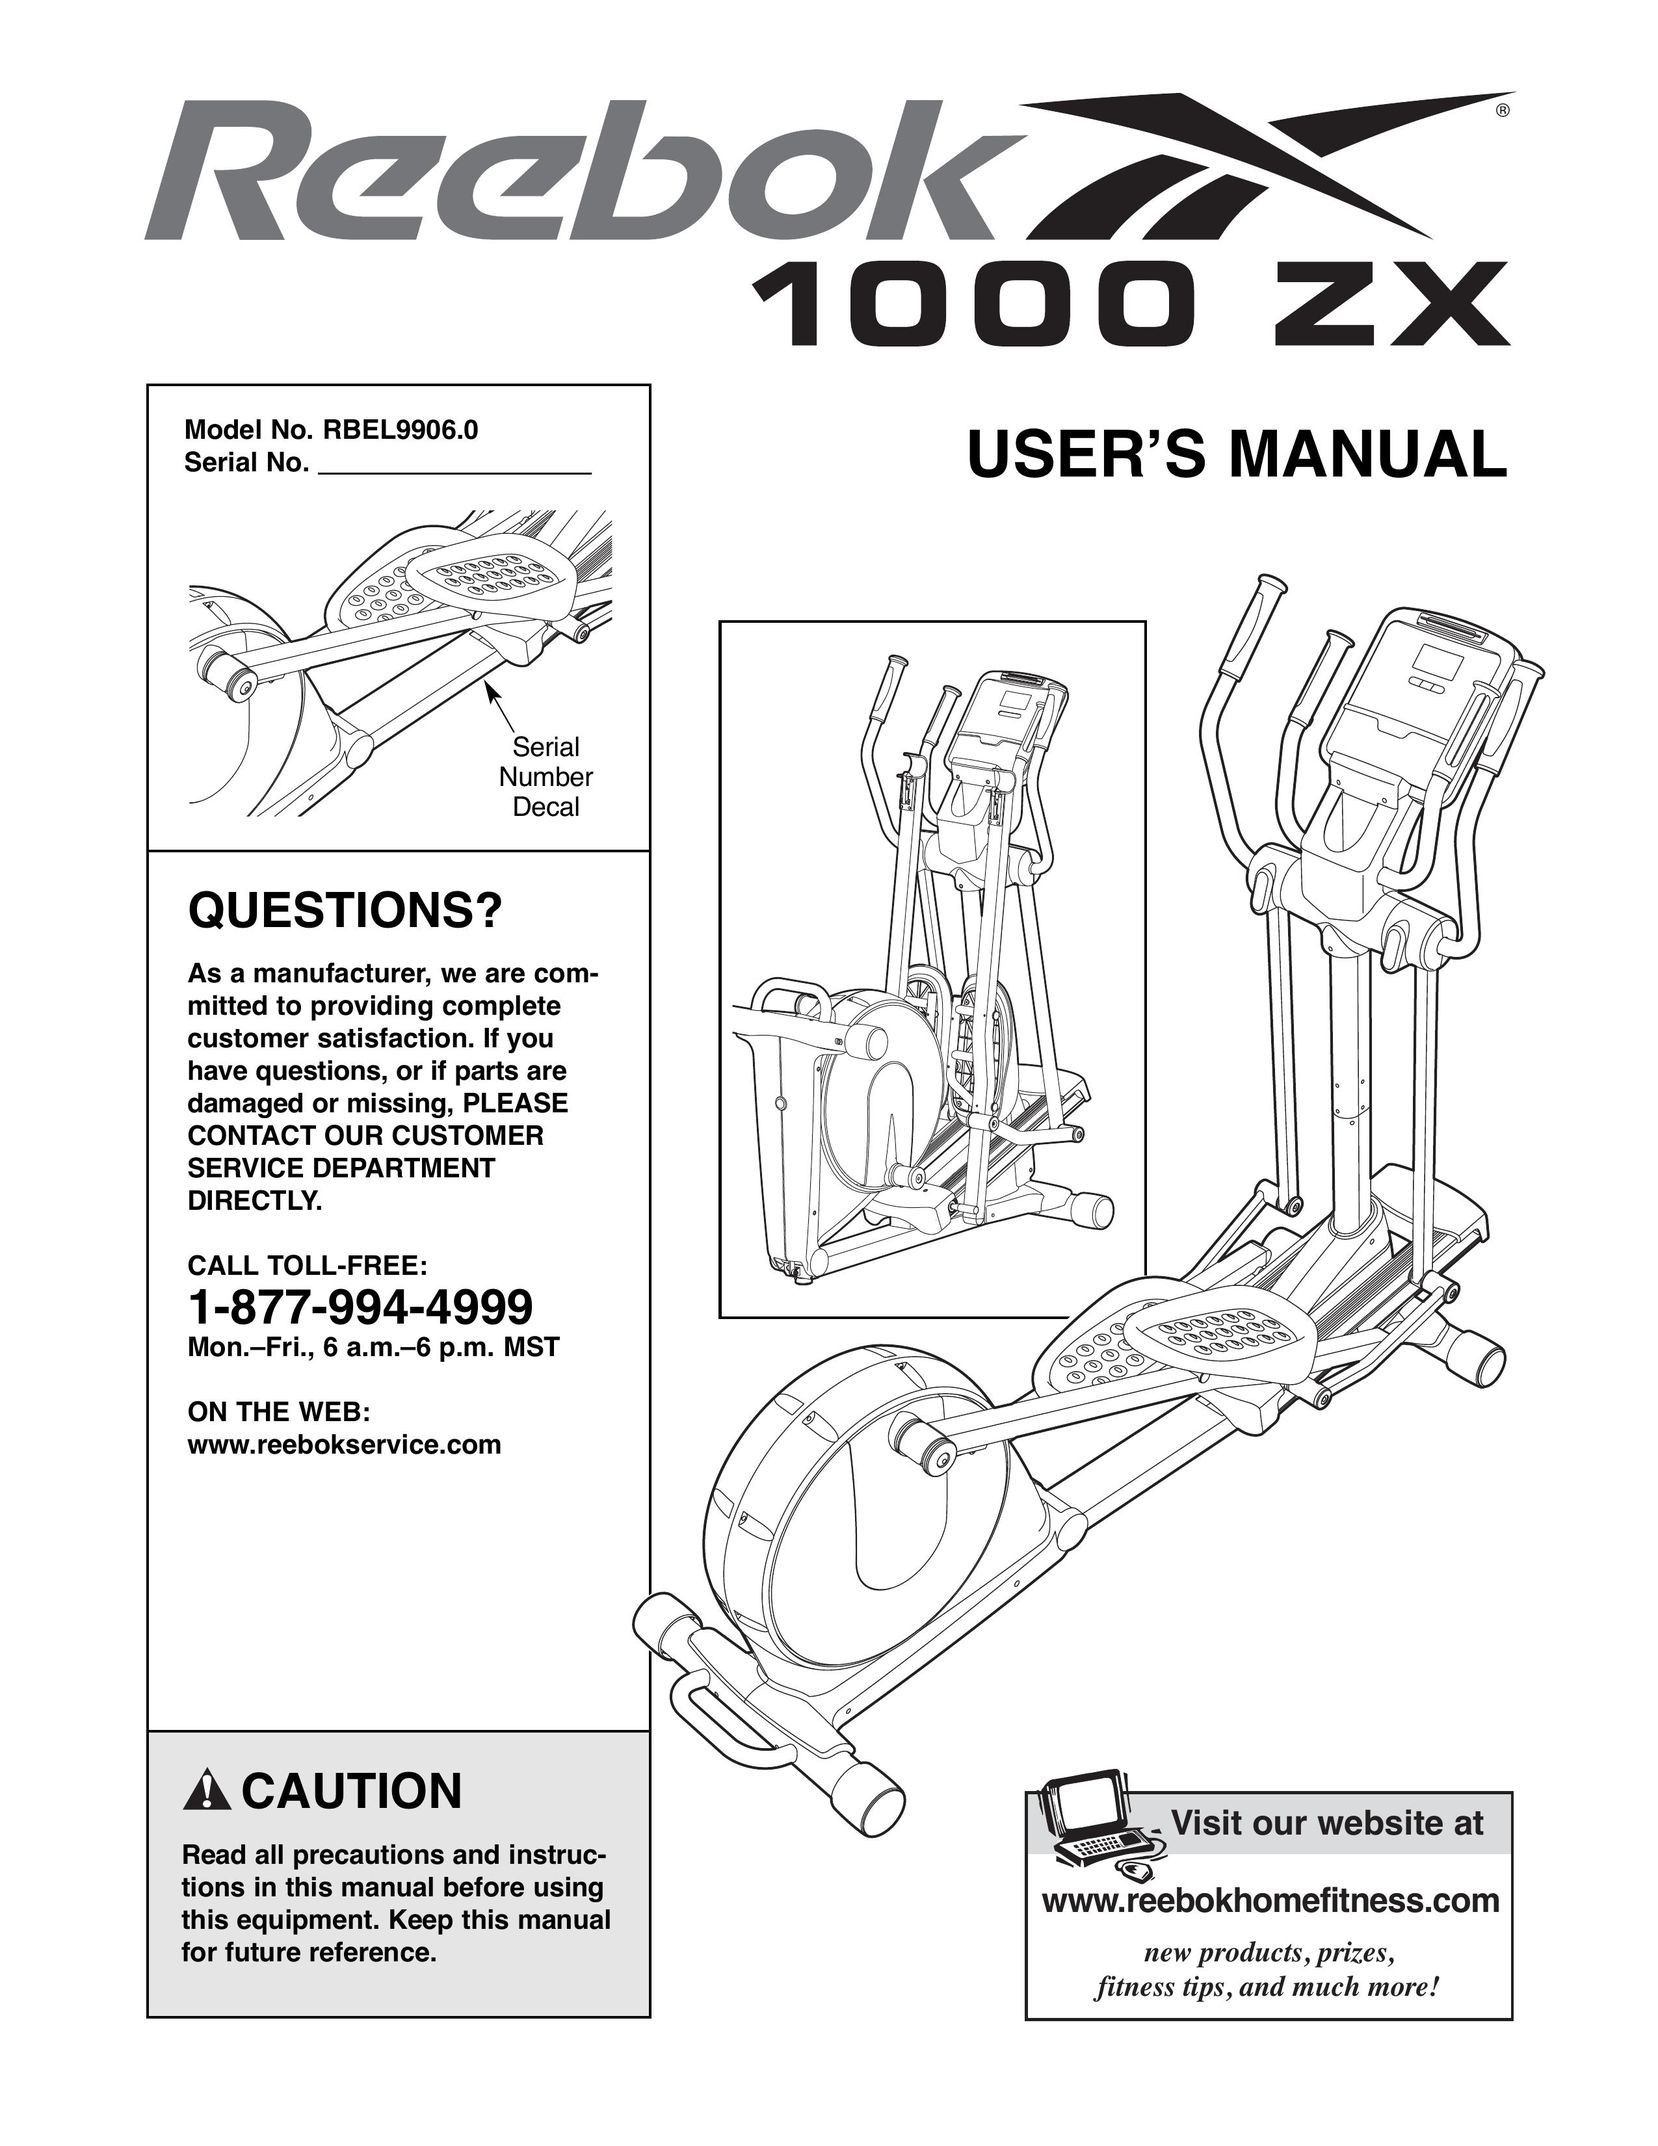 Reebok Fitness RBEL9906.0 Home Gym User Manual